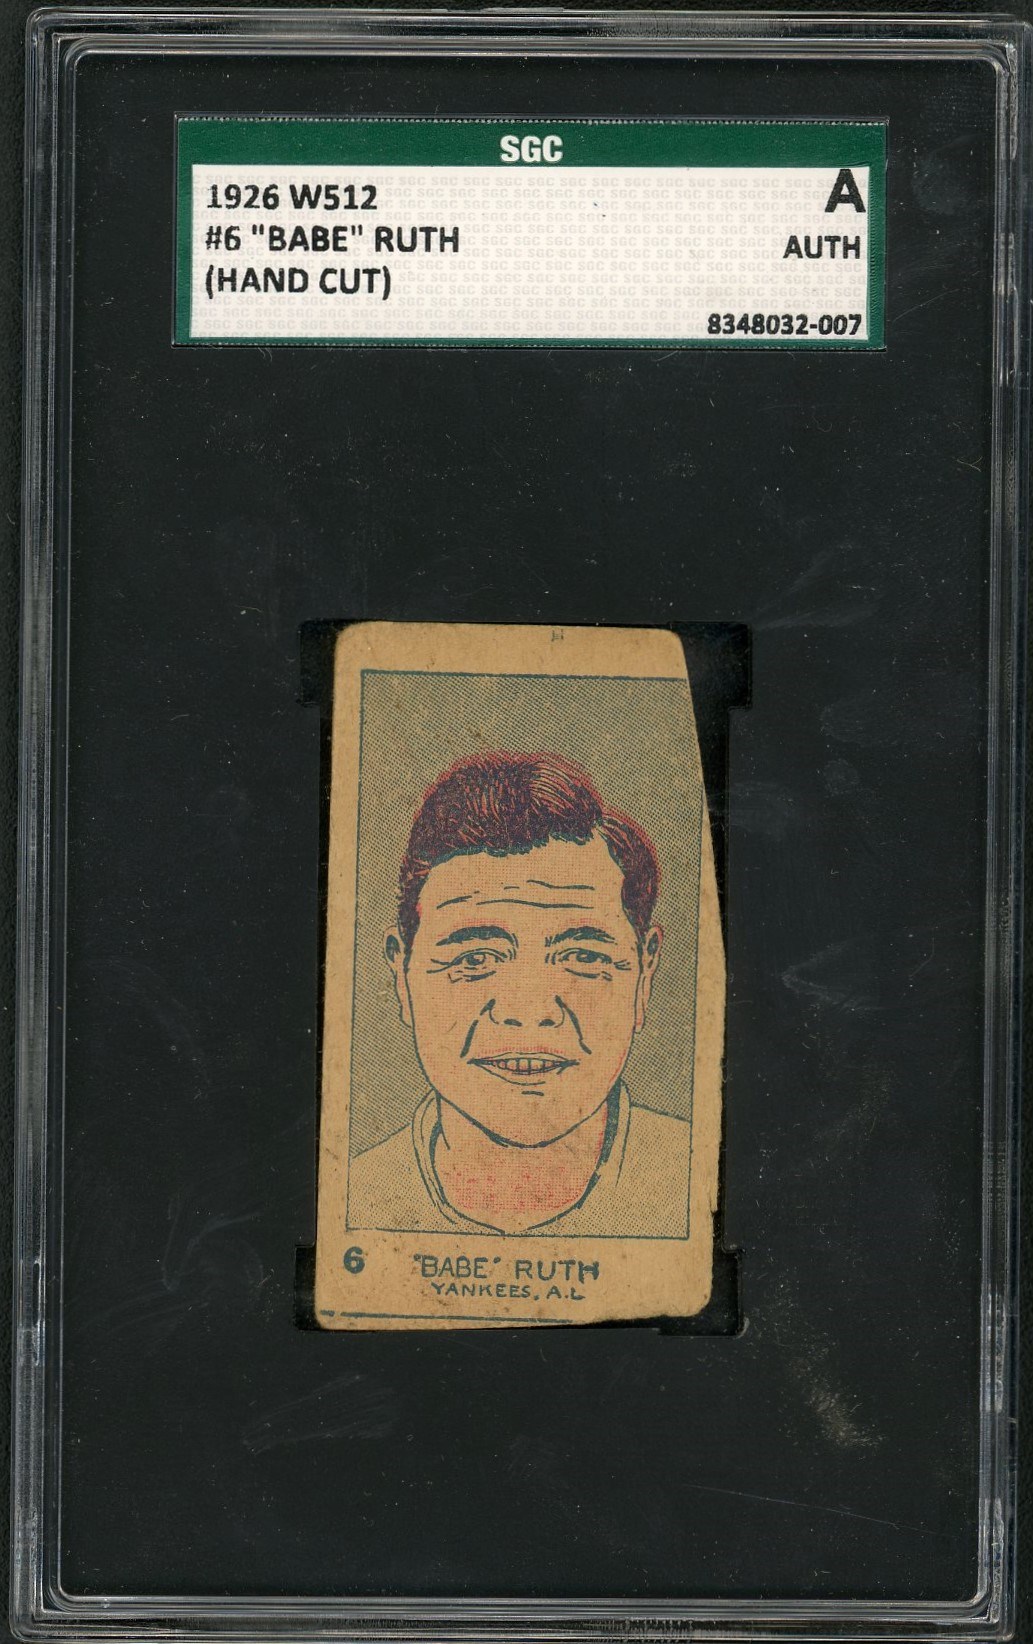 - 1926 W512 Babe Ruth (Hand Cut) - SGC AUTHENTIC